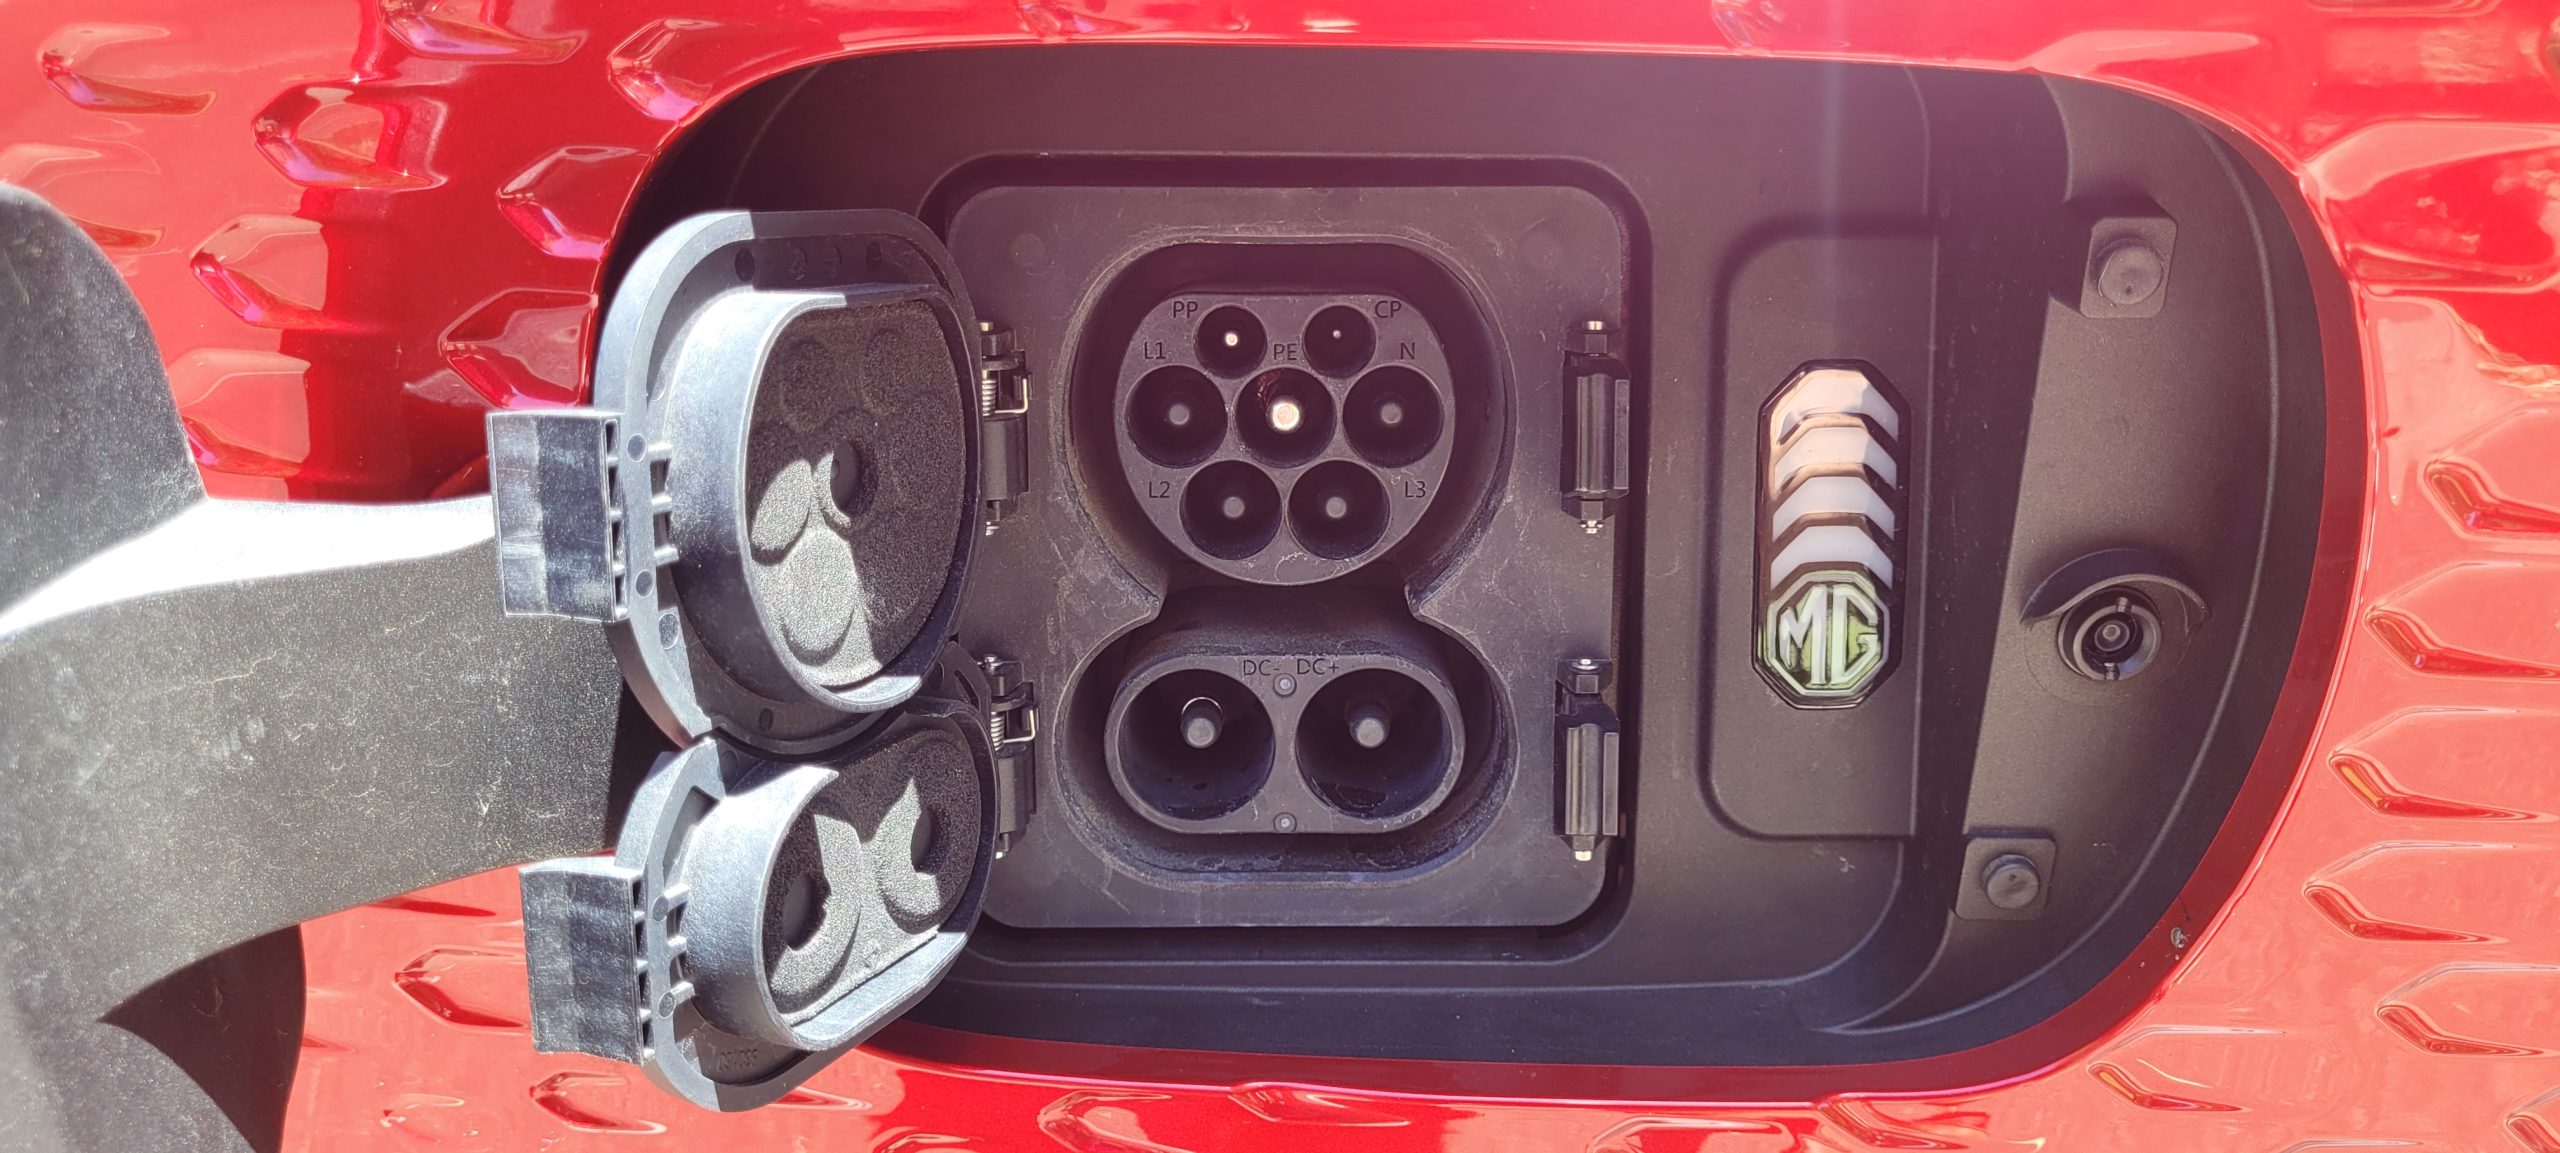 Close-up of MG ZS EV charging port